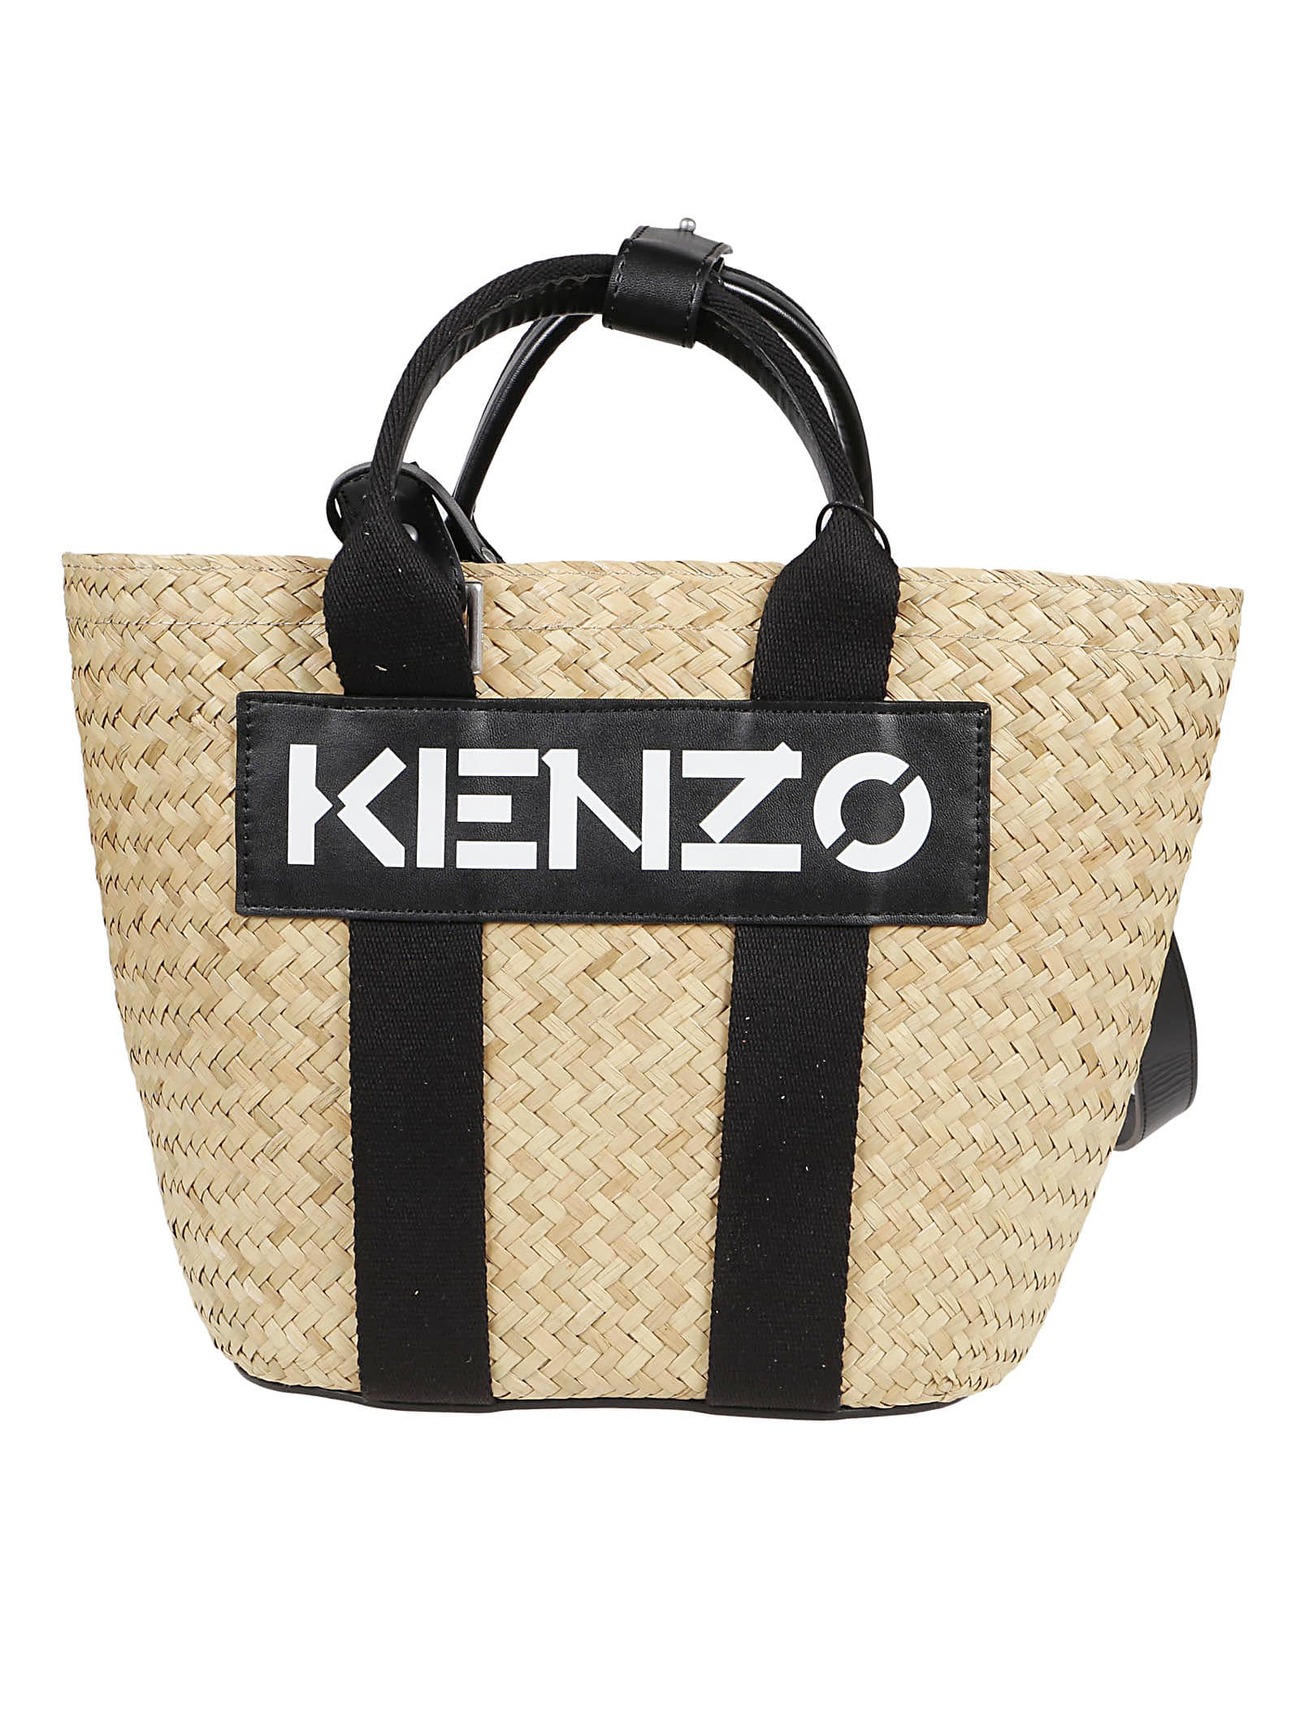 Kenzo Small Basket Bag in noir